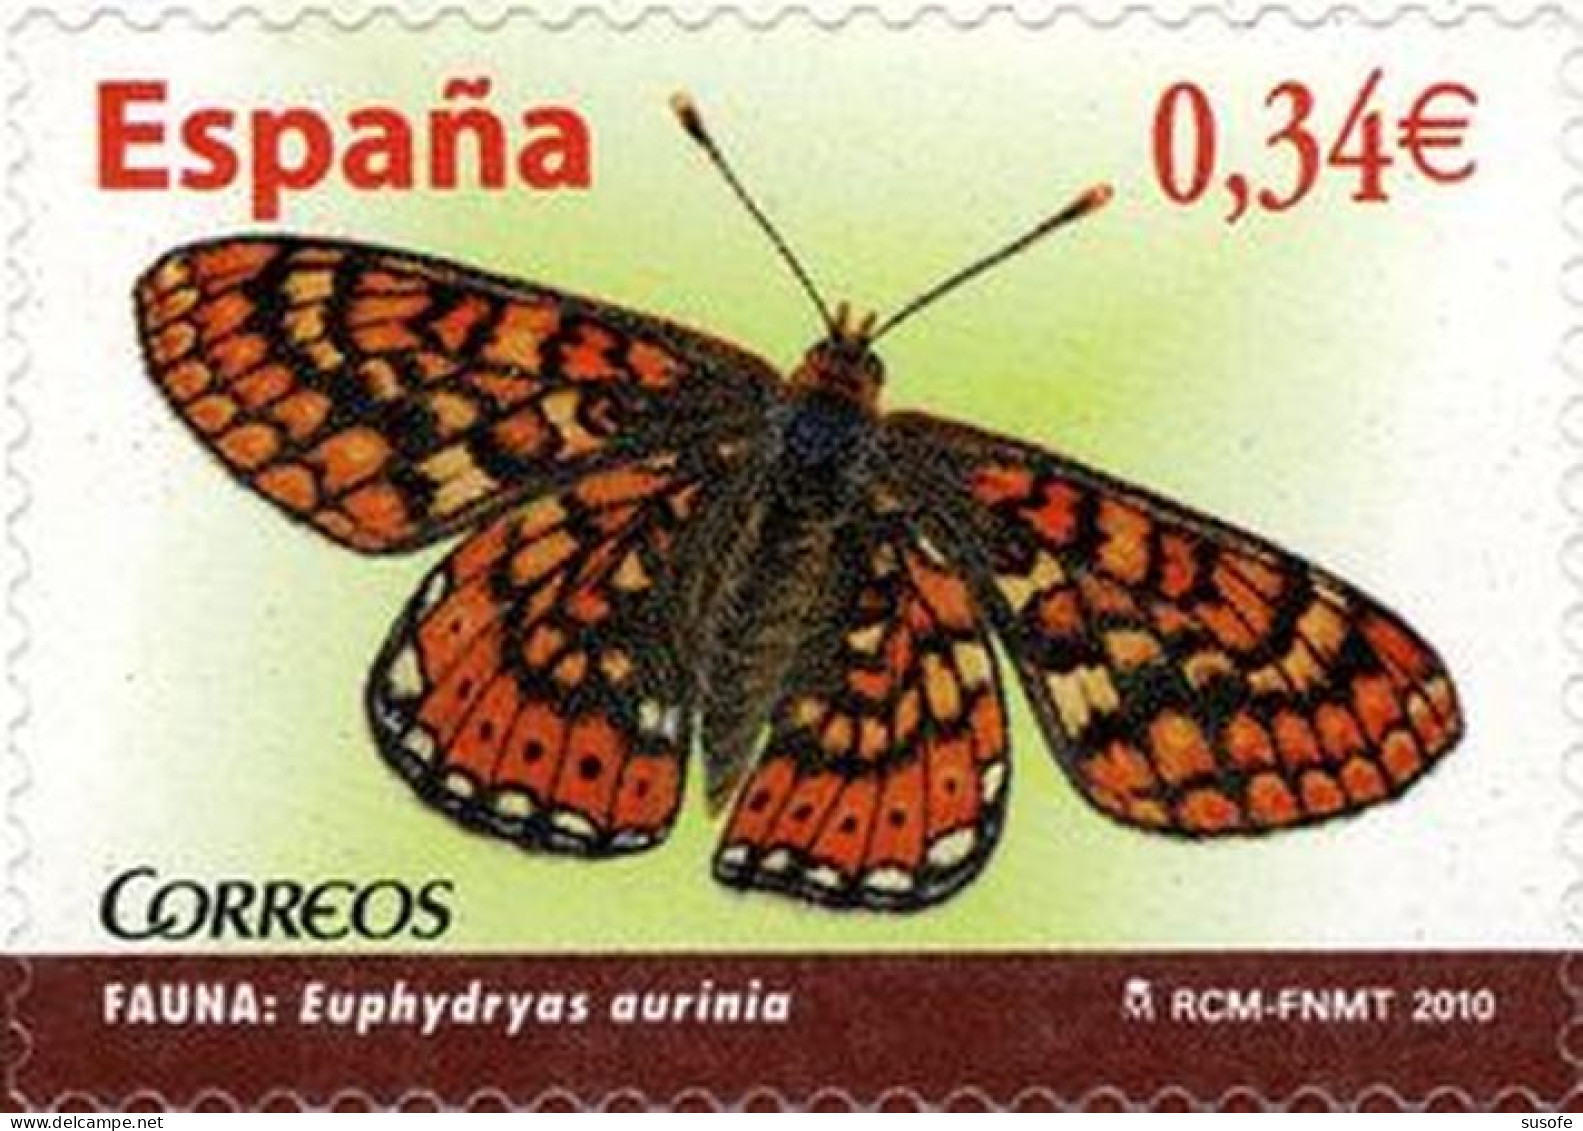 España 2010 Edifil 4534 Sello ** Fauna Mariposa Butterfly Euphydryas Aurinia Michel 4493 Yvert 4198 Spain Stamp Timbre - Ongebruikt